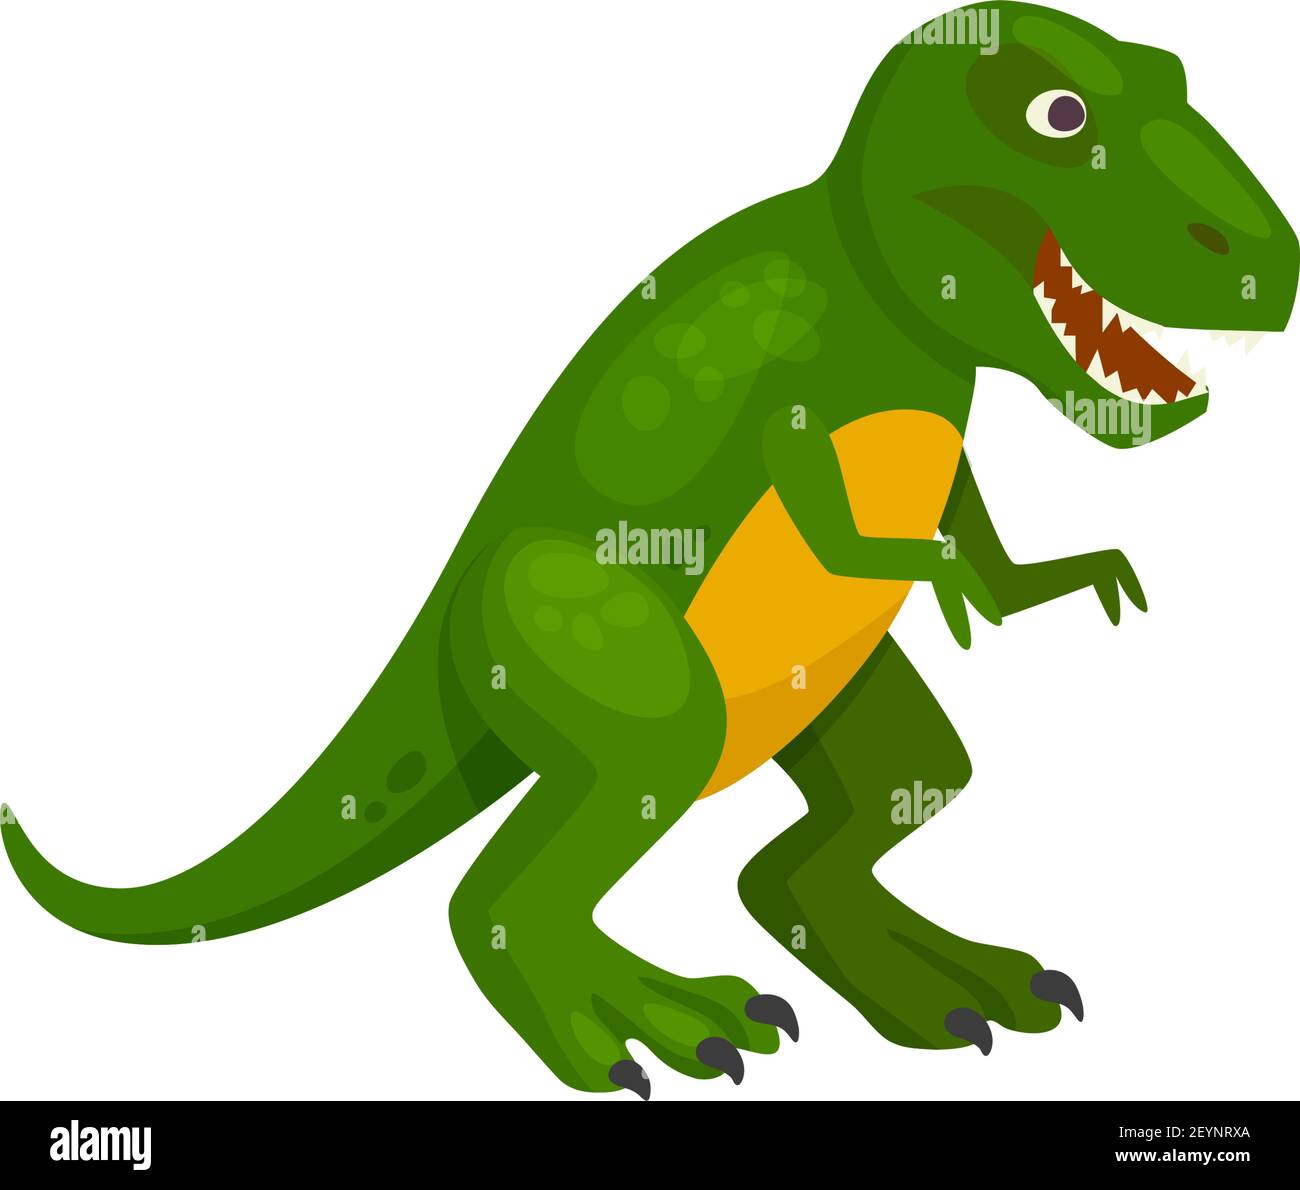 t-rex logo icon, smile tyrannosaurus, Vector illustration of cute